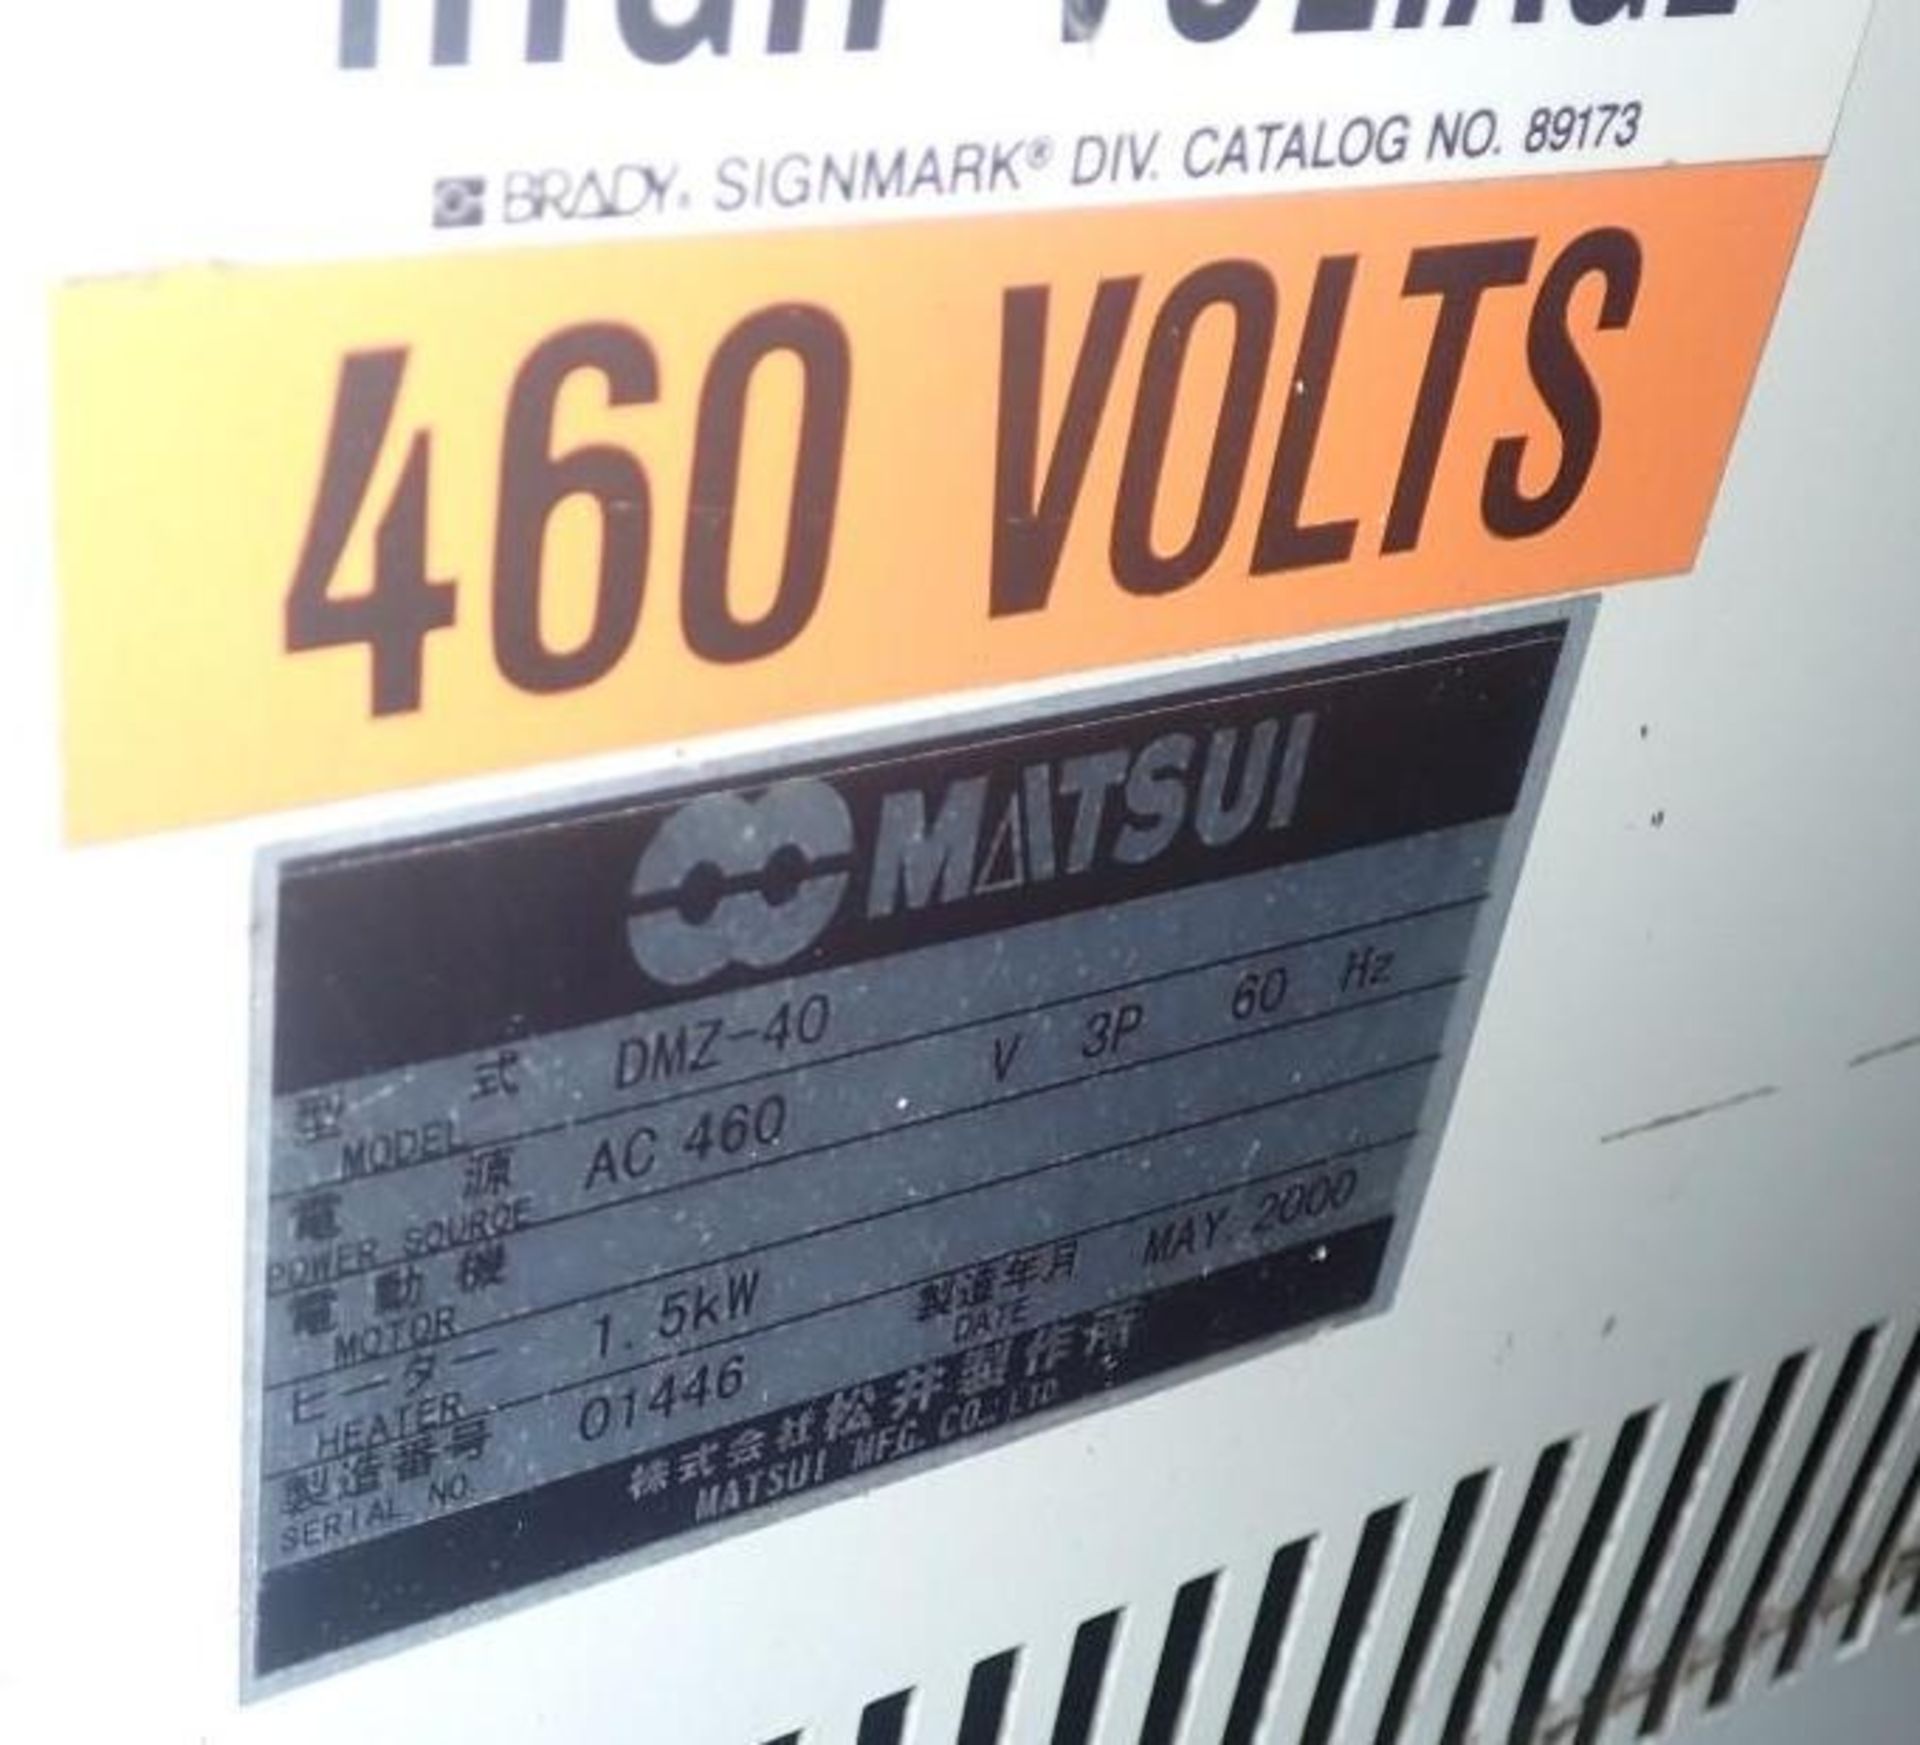 Matsui #DMZ-40 Dryer - Image 5 of 5